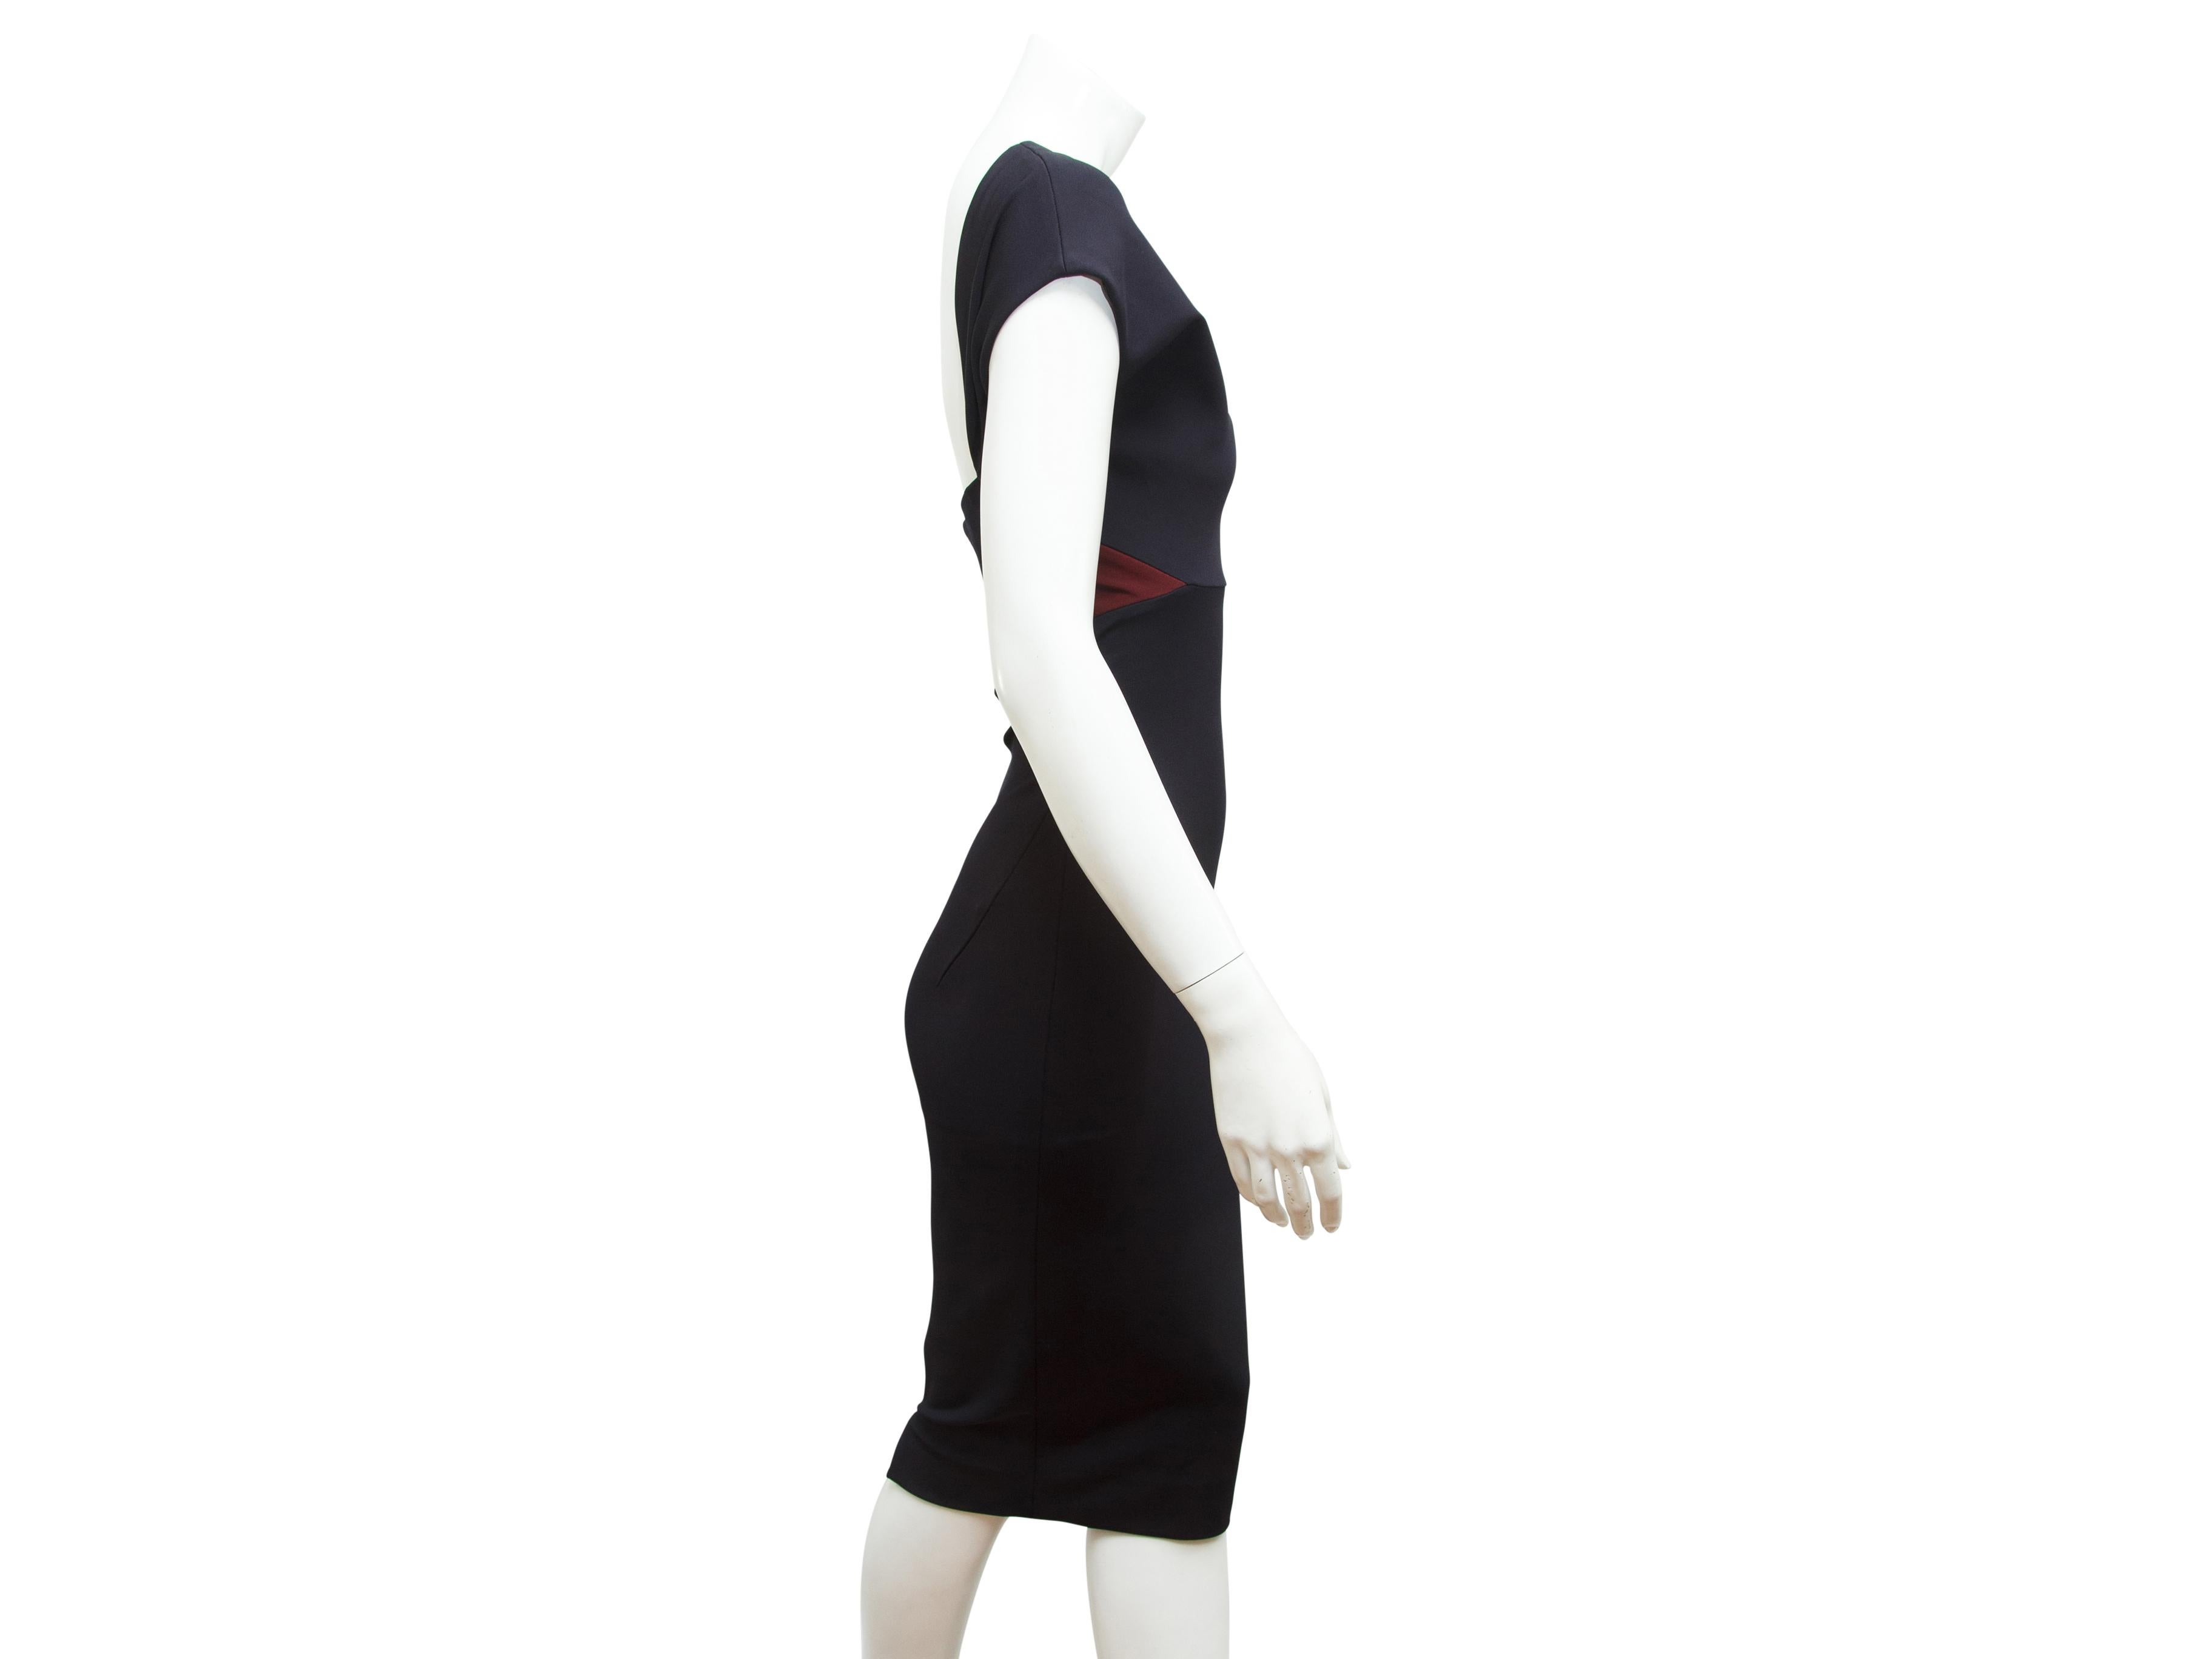 Product details:  Black and burgundy sheath dress by Victoria Beckham.  Boatneck.  Short dolman sleeves.  Open back.  Exposed back zip closure.  Silvertone hardware.  34